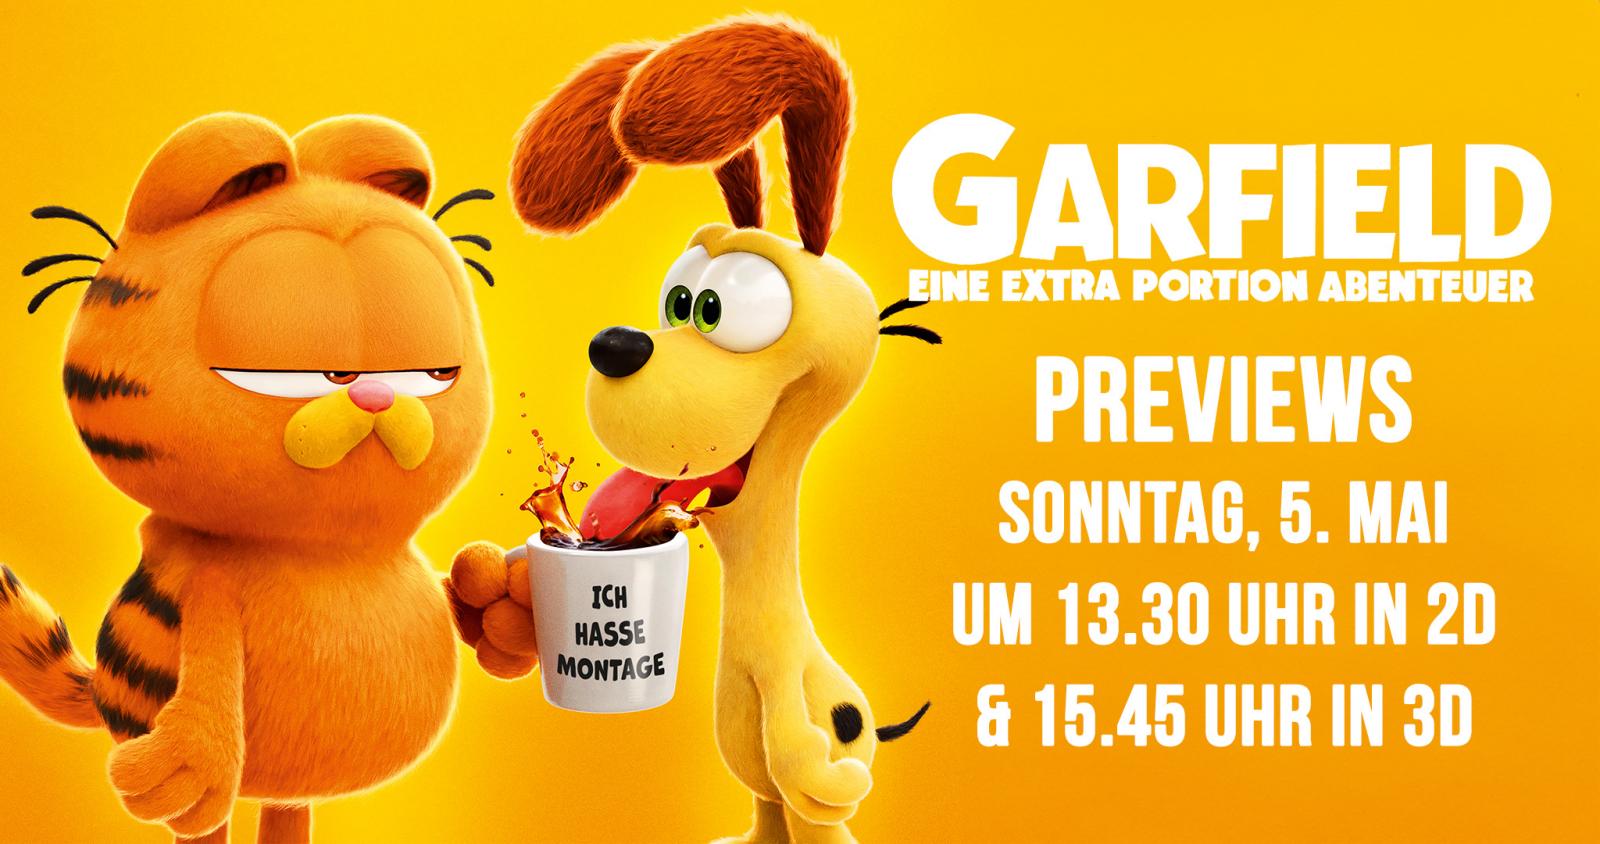 Family Preview: Garfield - Eine Extra Portion Abenteuer